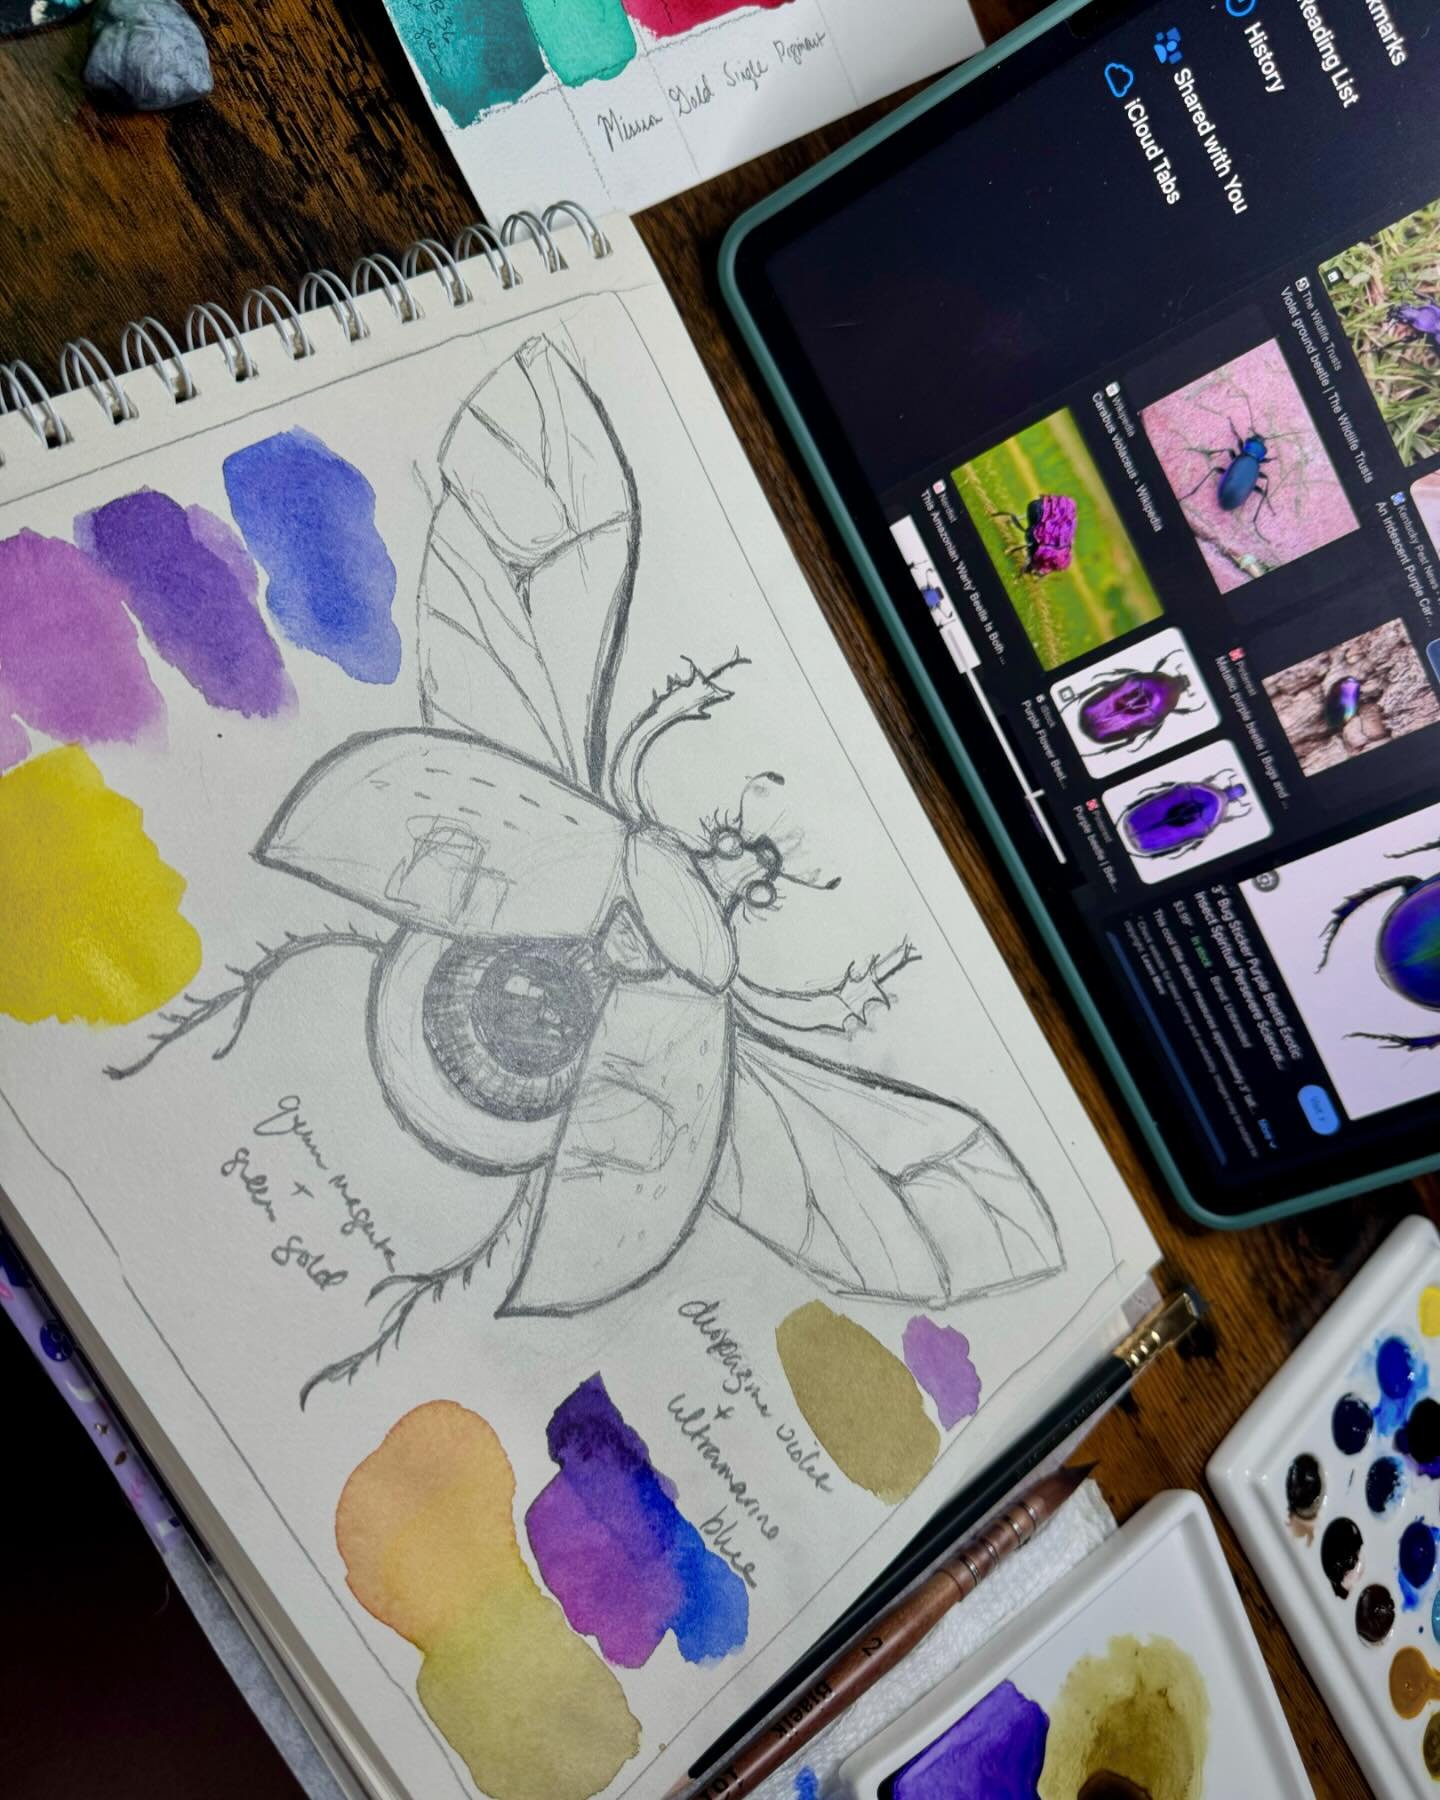 Planning a new painting 🪲

#noctifloradesigns #spookybotanicalart #insectart #sketching #artprocess #spookyart #darkacademiaaesthetic